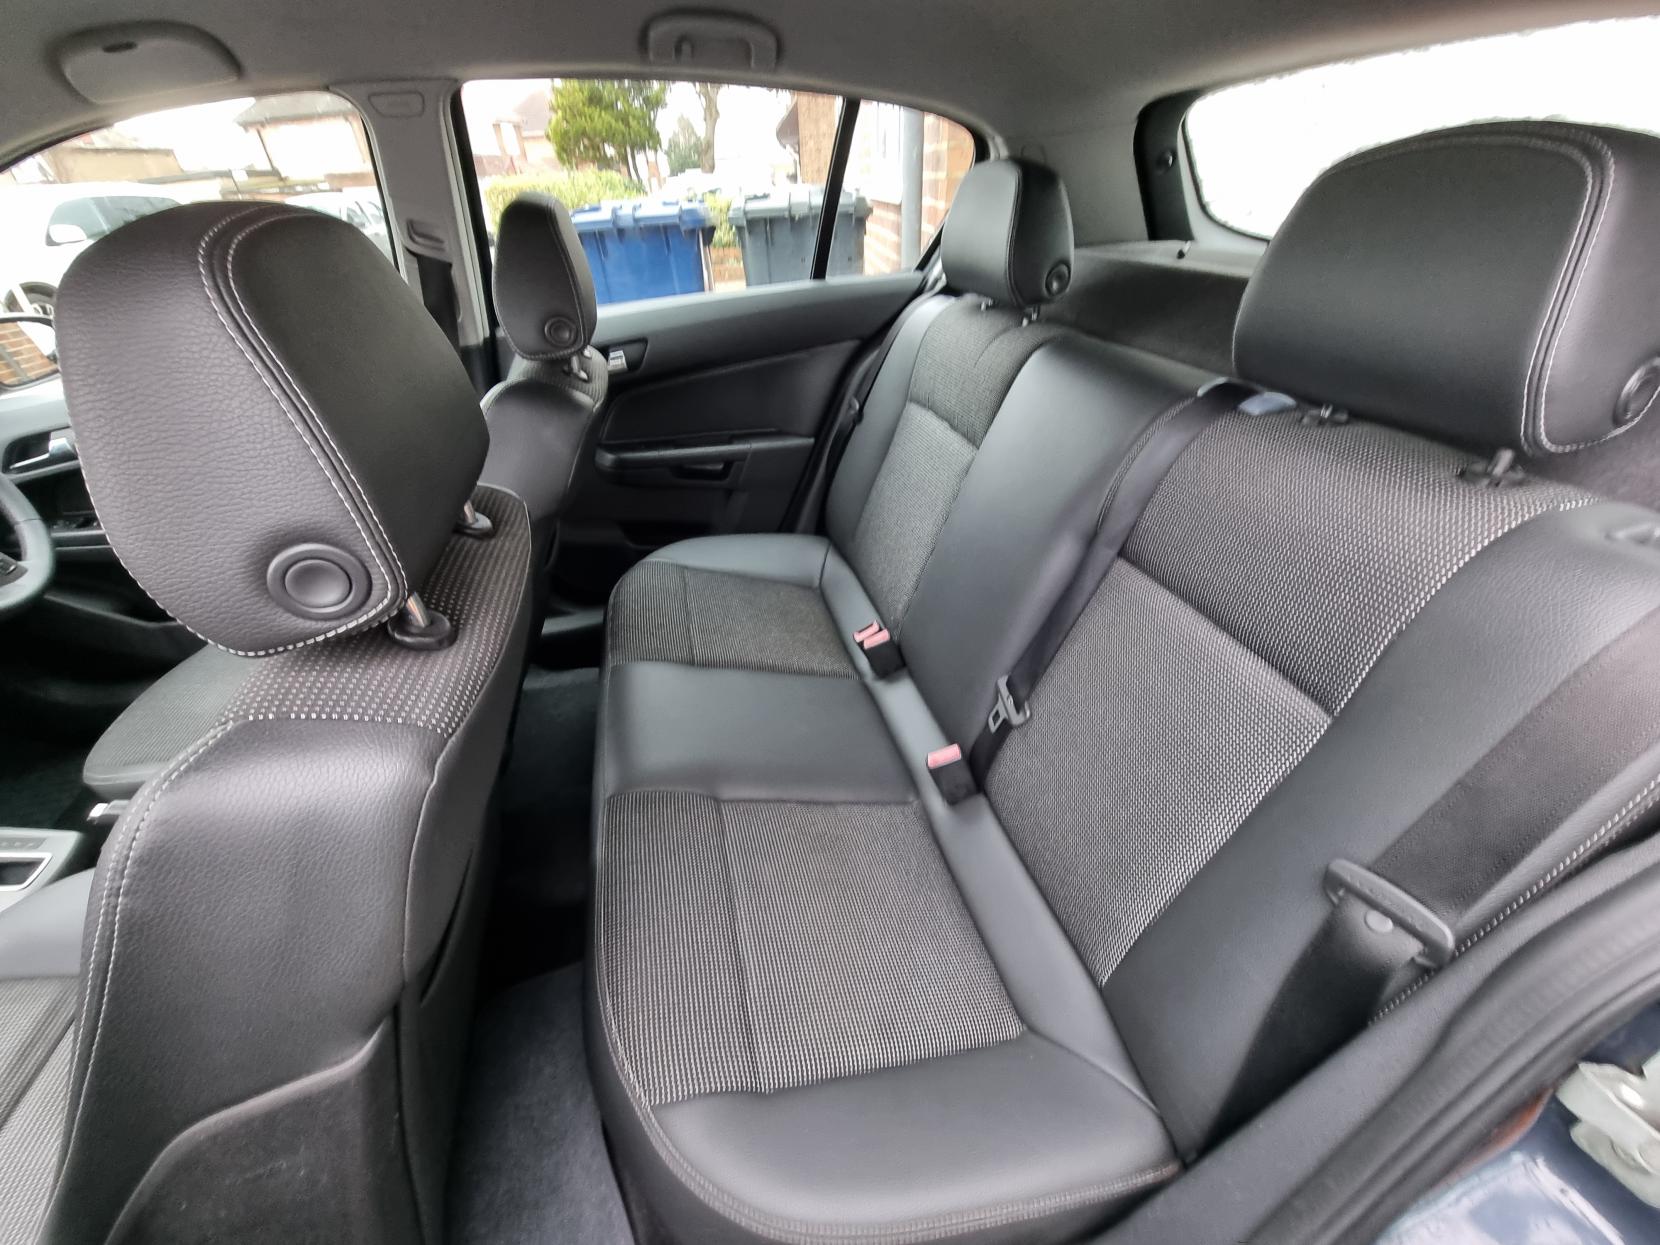 Vauxhall Astra 1.8i 16v Design Hatchback 5dr Petrol Automatic (197 g/km, 123 bhp)